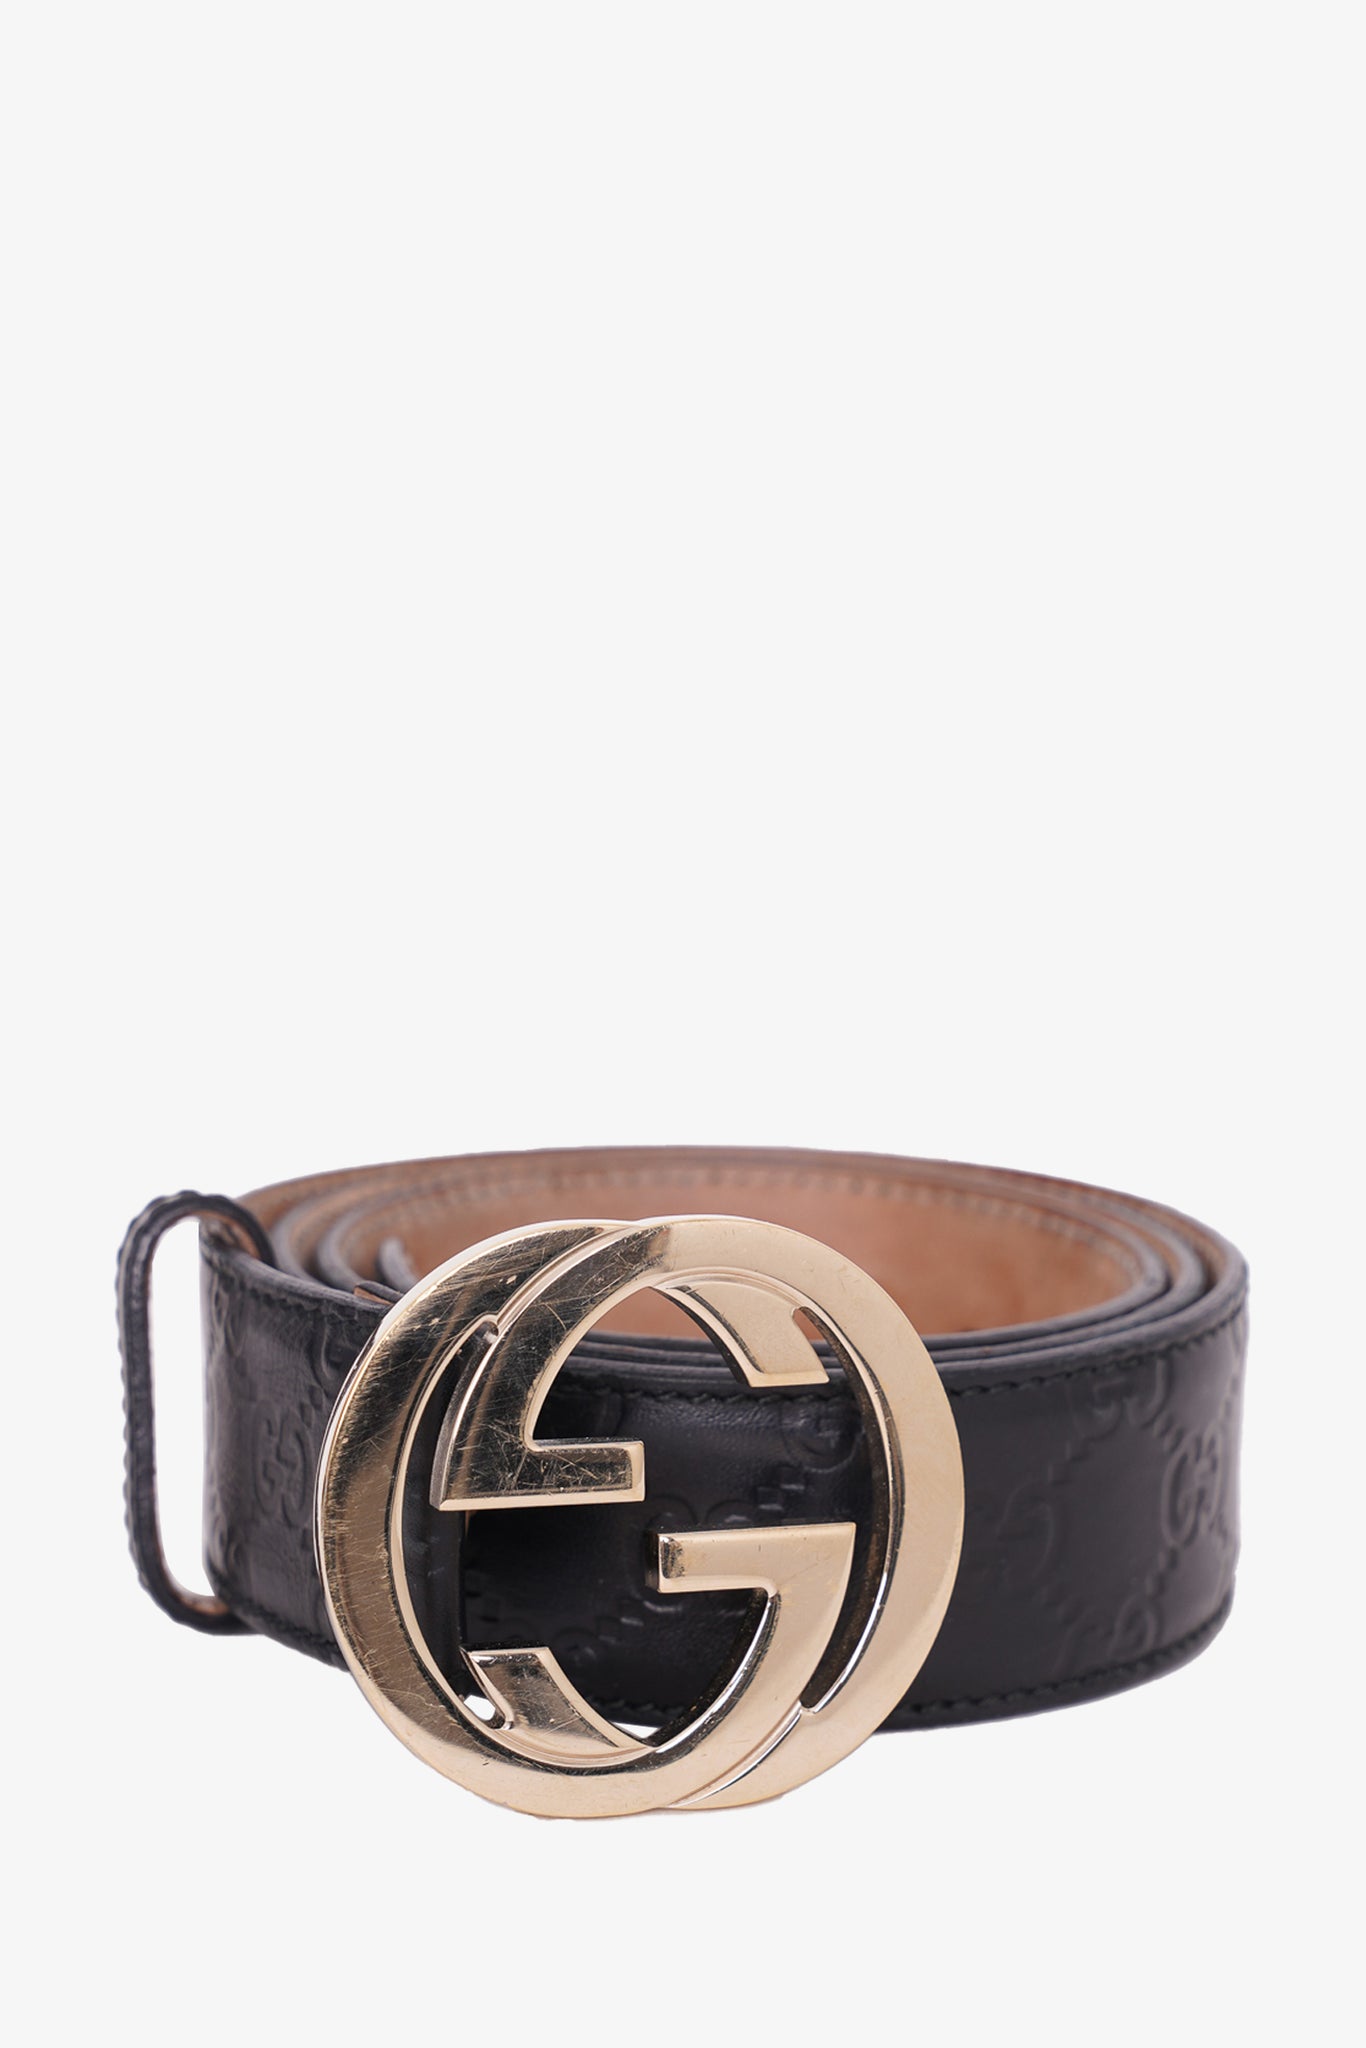 Gucci Black Monogram GG Buckle Belt Size 38 'As Is'